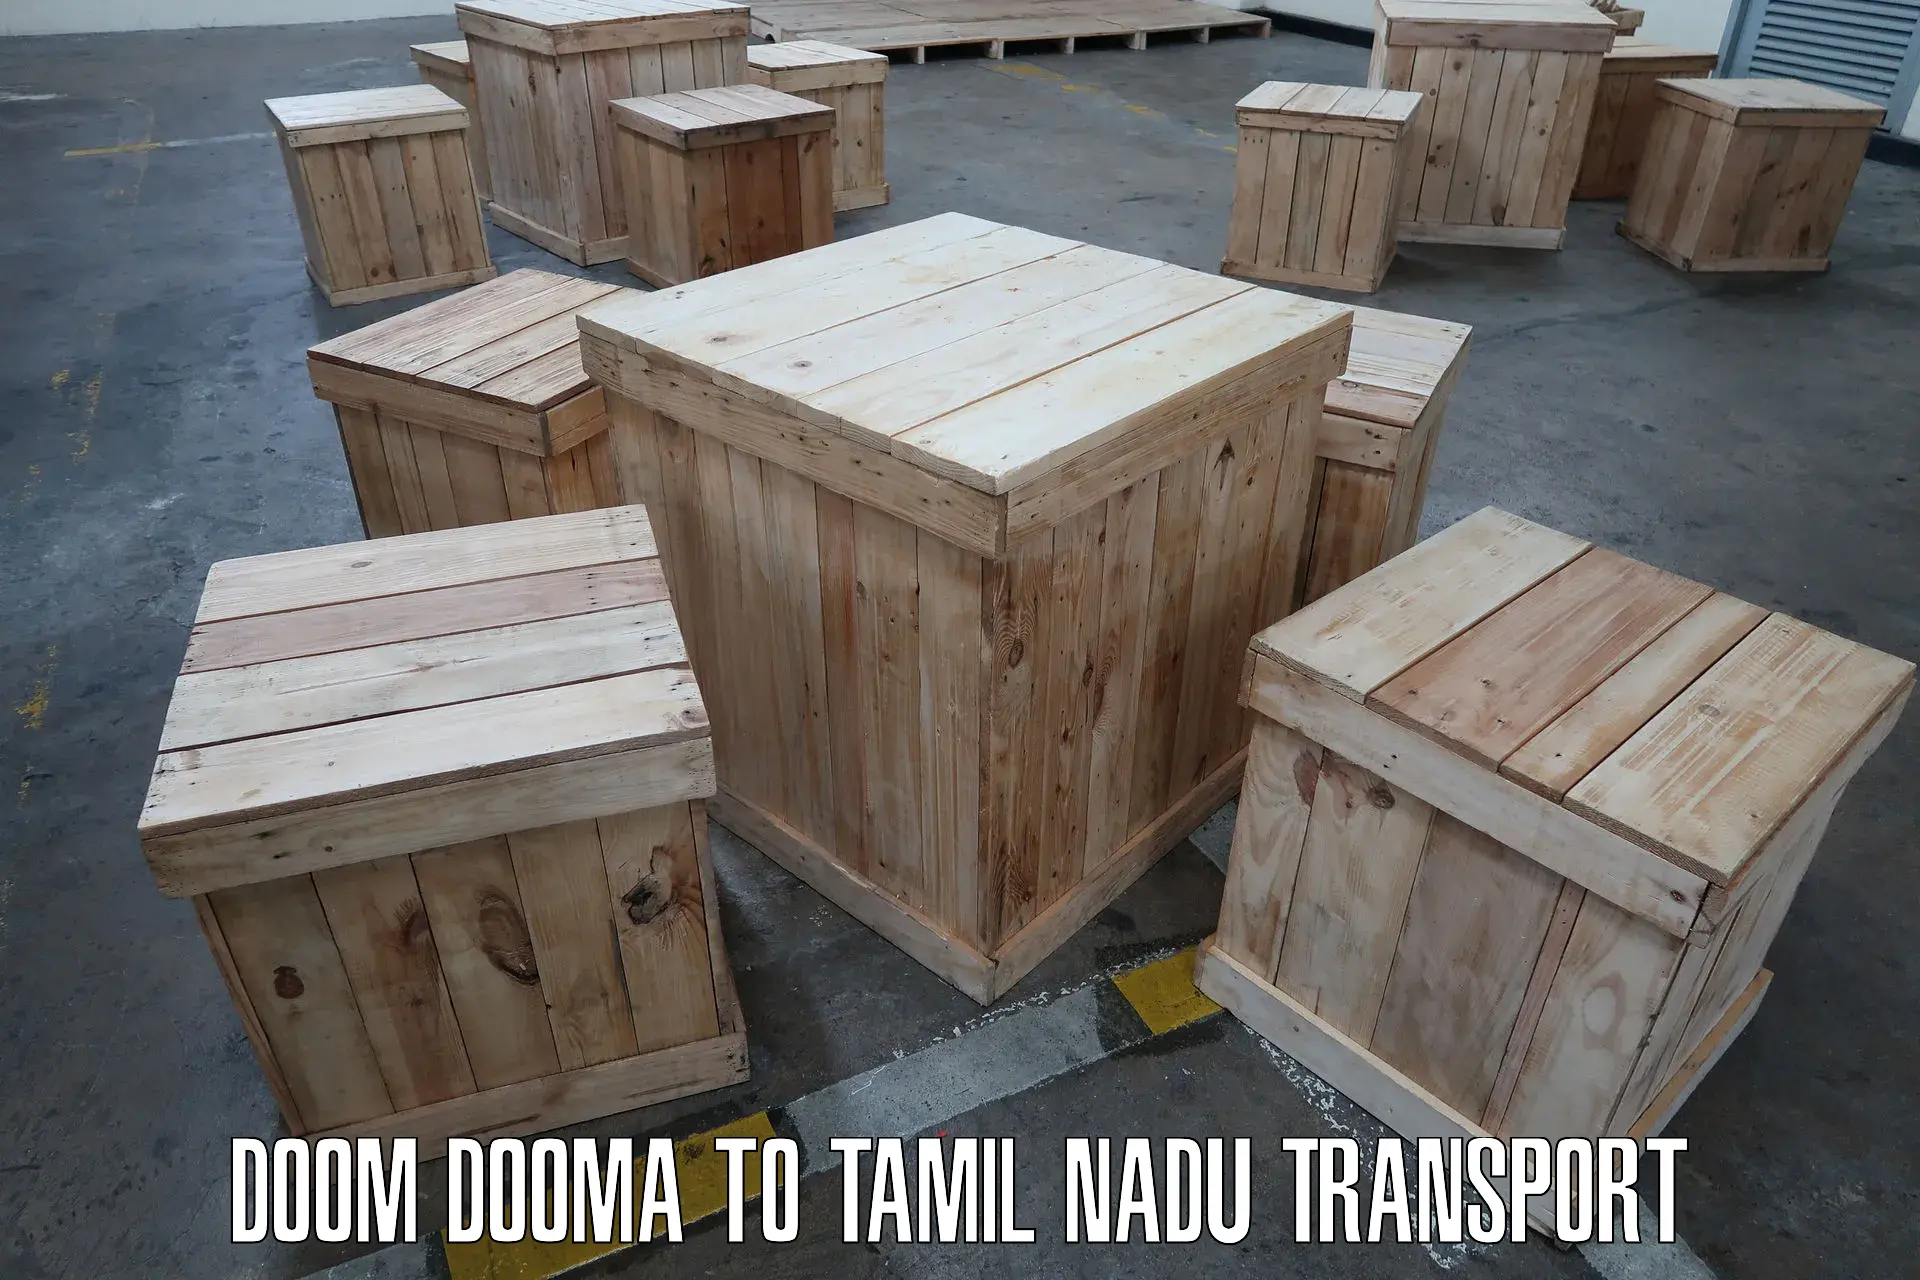 Transport in sharing Doom Dooma to Ambattur